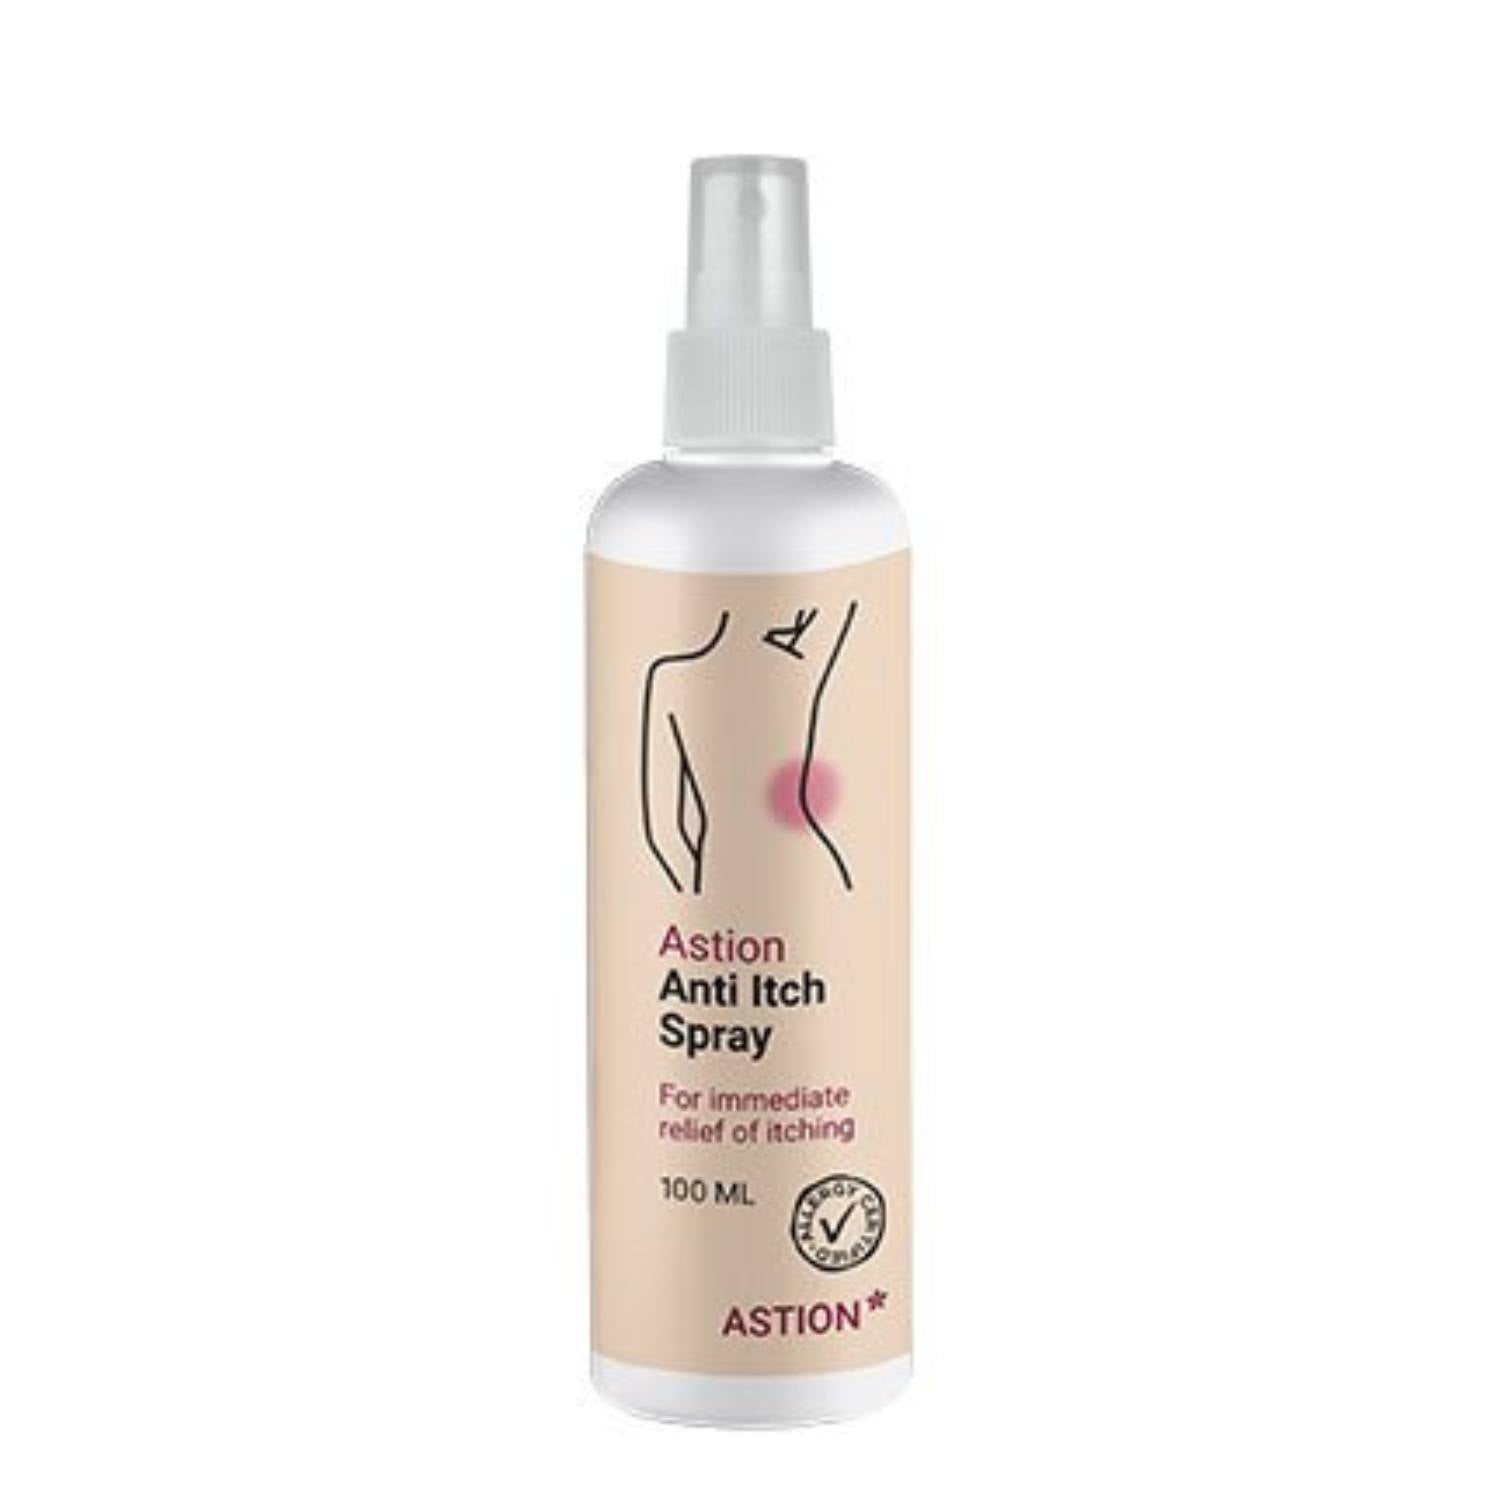 Se Anti itch spray (mod kløe), 100 ml. - Cremer fra Astma Allergi Shoppen hos Astma Allergi Shoppen